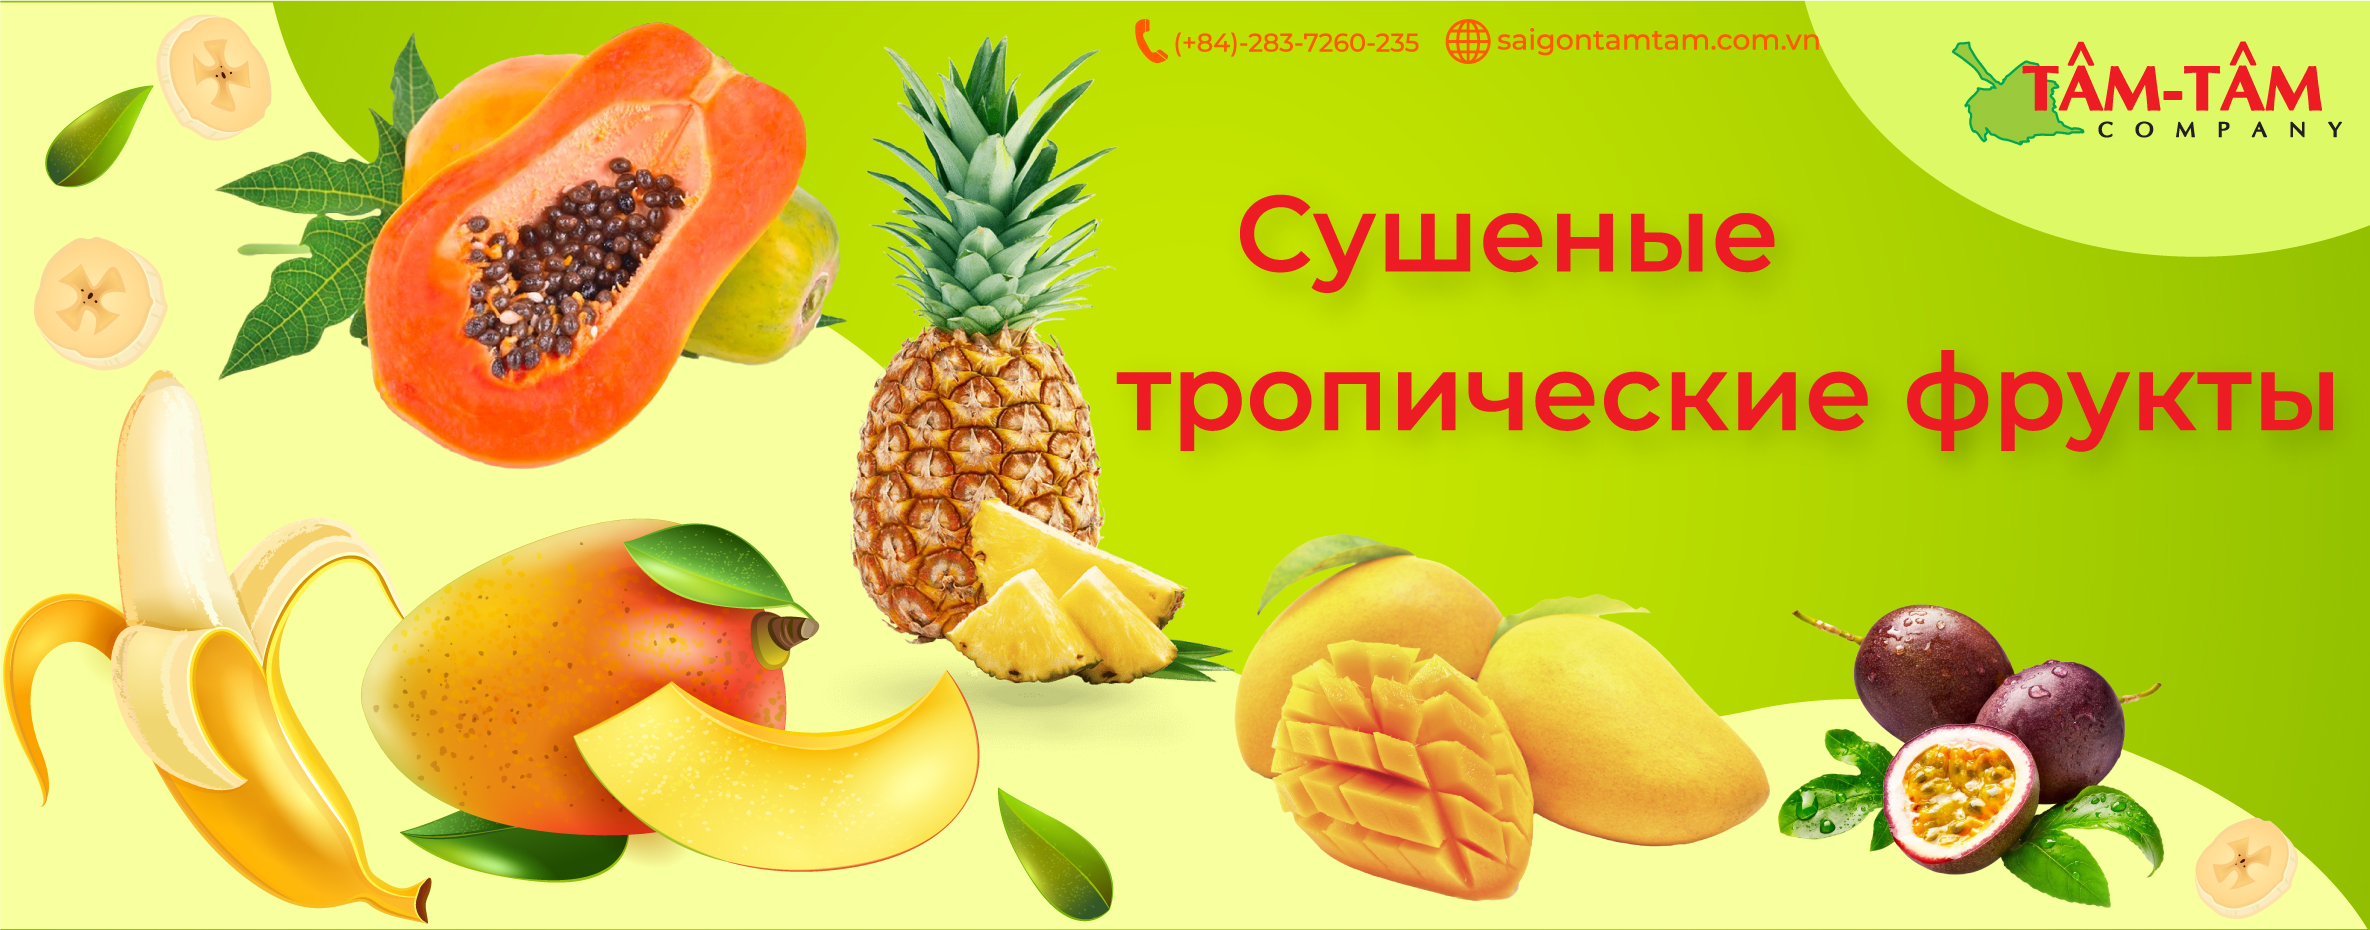 banner-Сушеные-тропические-фрукты-sai-gon-tam-tam